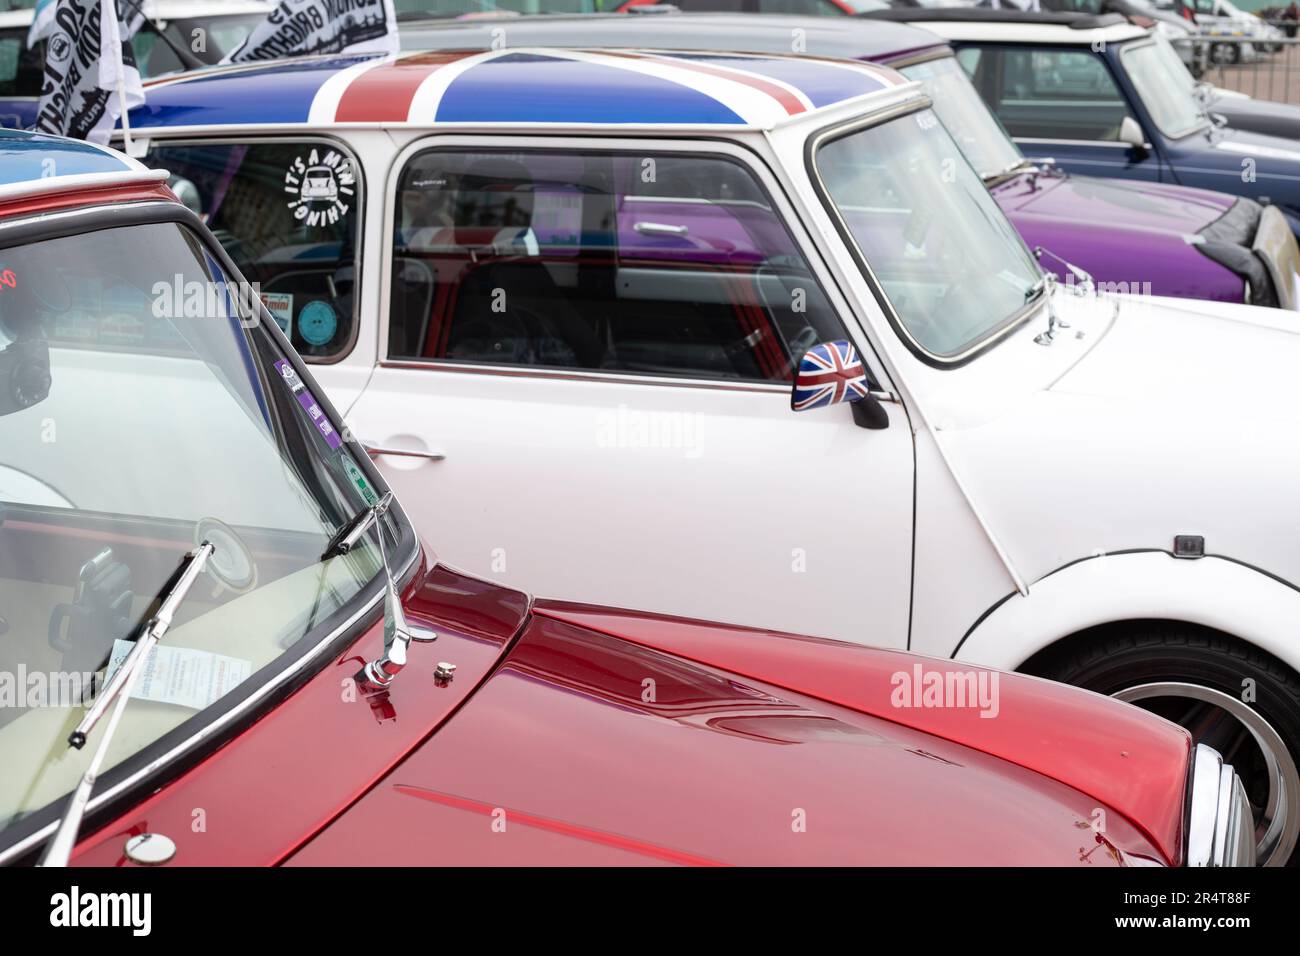 Brighton, UK - May 19 2019:  A row of retro Mini cars taking part in the London Brighton Mini Run 2019. The colours are red, white and purple. Stock Photo